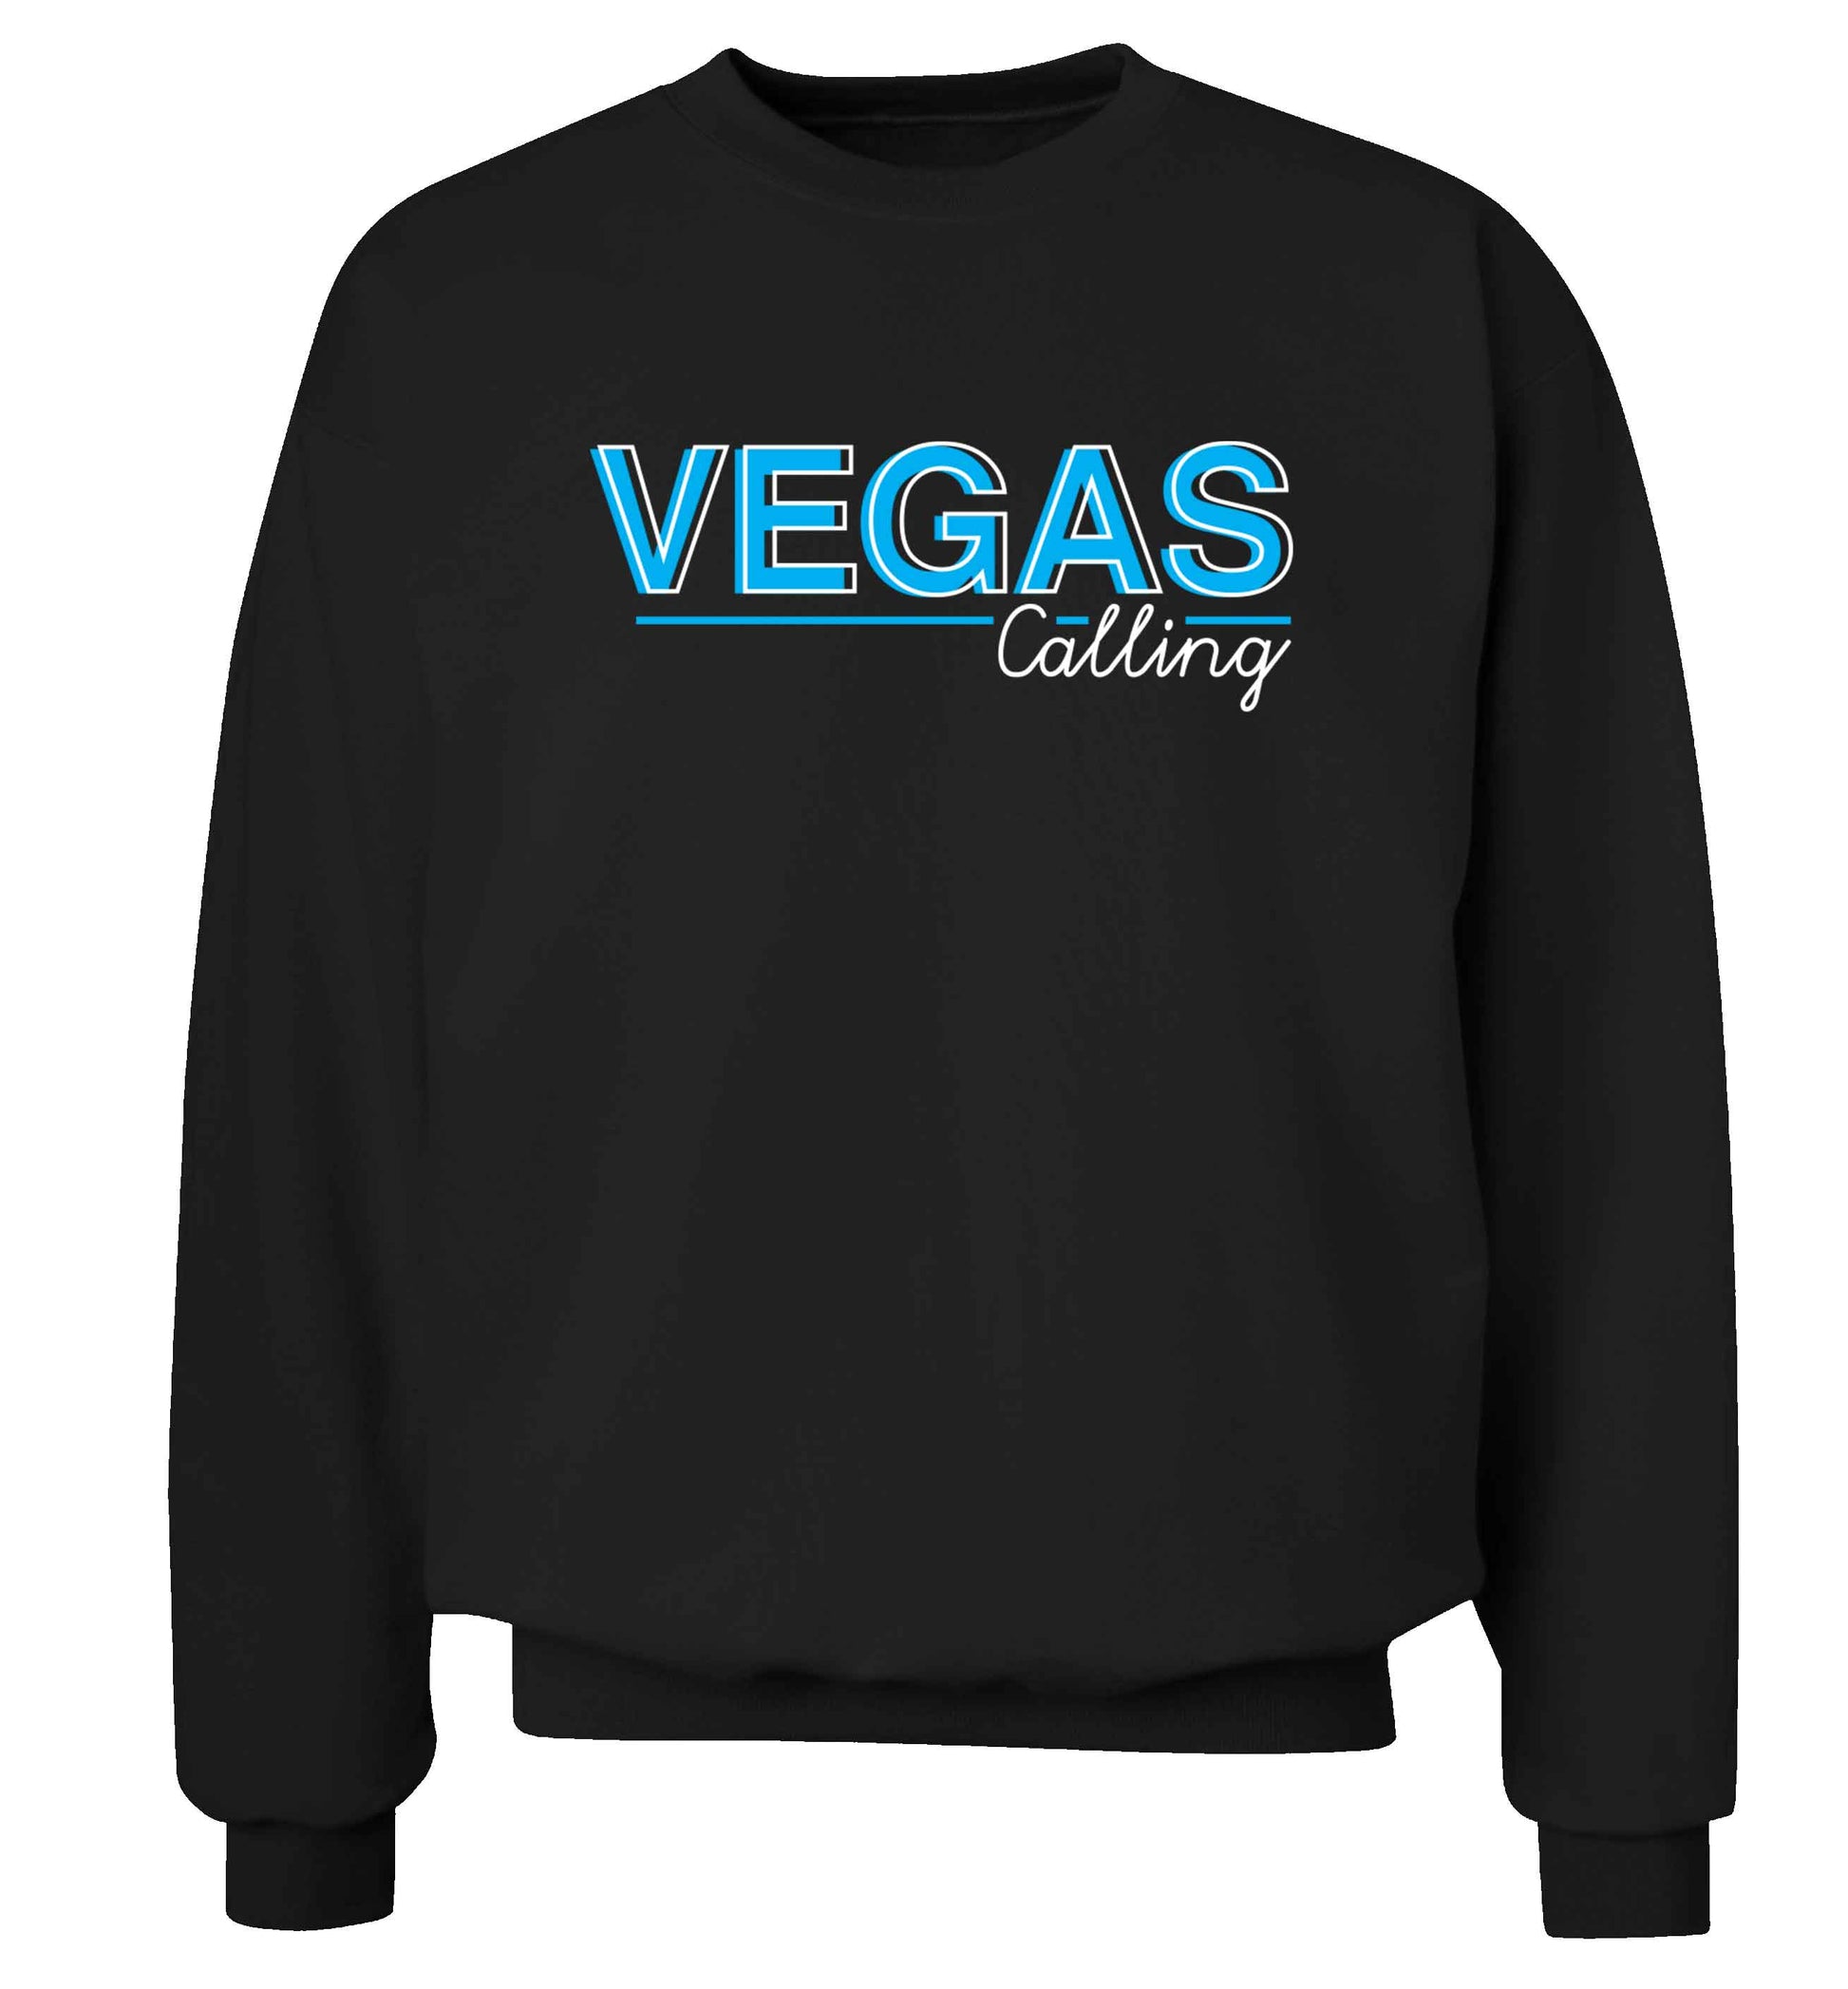 Vegas calling Adult's unisex black Sweater 2XL